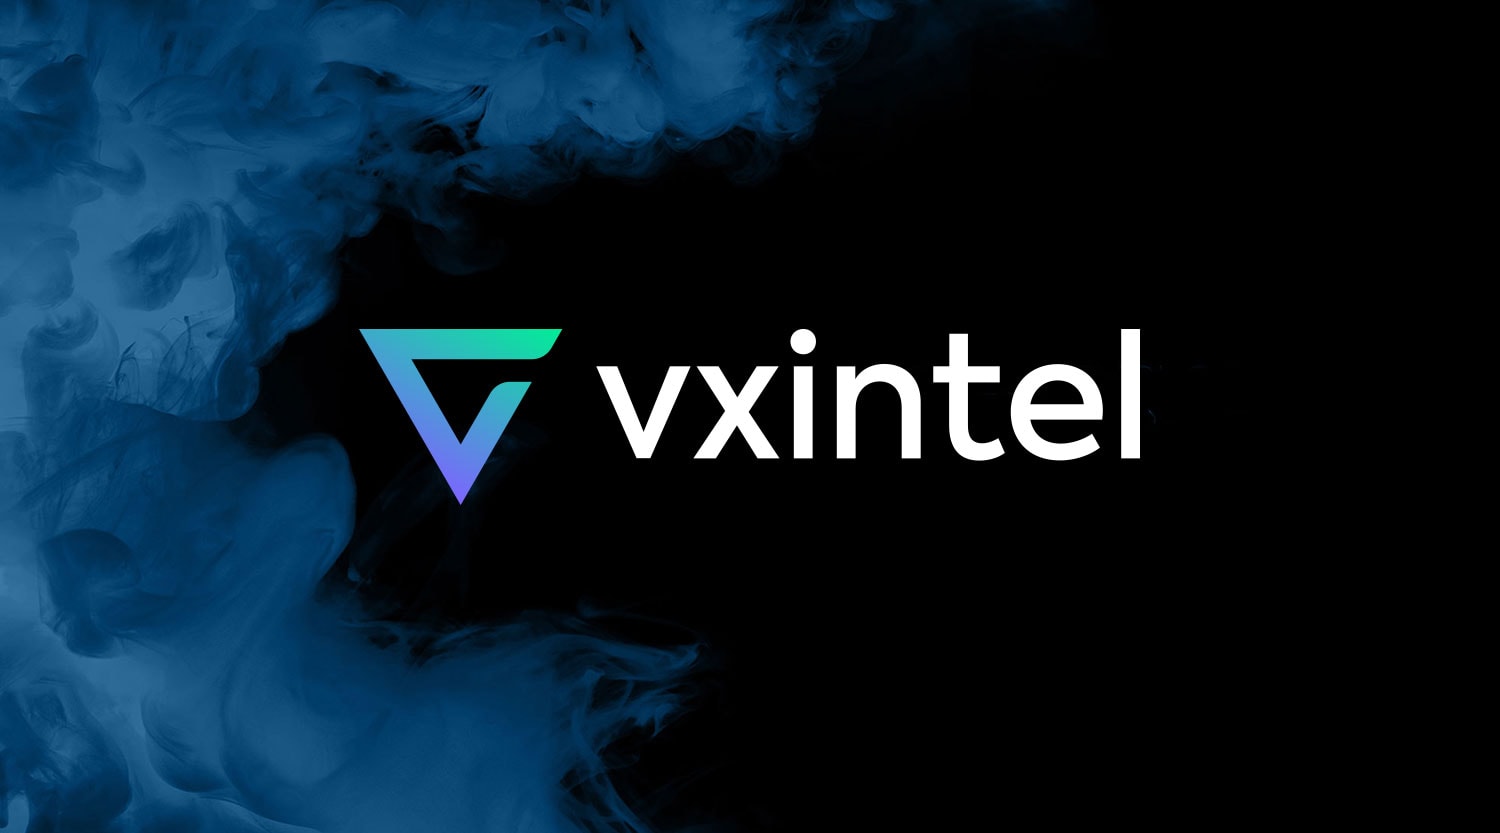 vxintel logo with a blue background